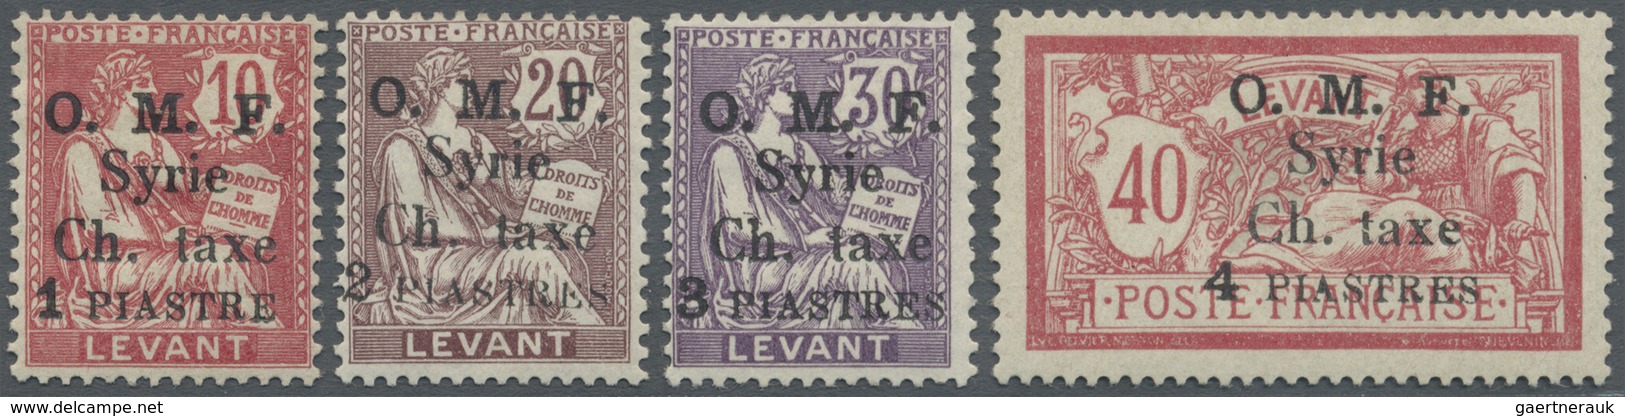 * Syrien - Portomarken: 1920, O.M.F. Overprints On French Levant, Complete Set Of Four Values, Mint O. - Syrië